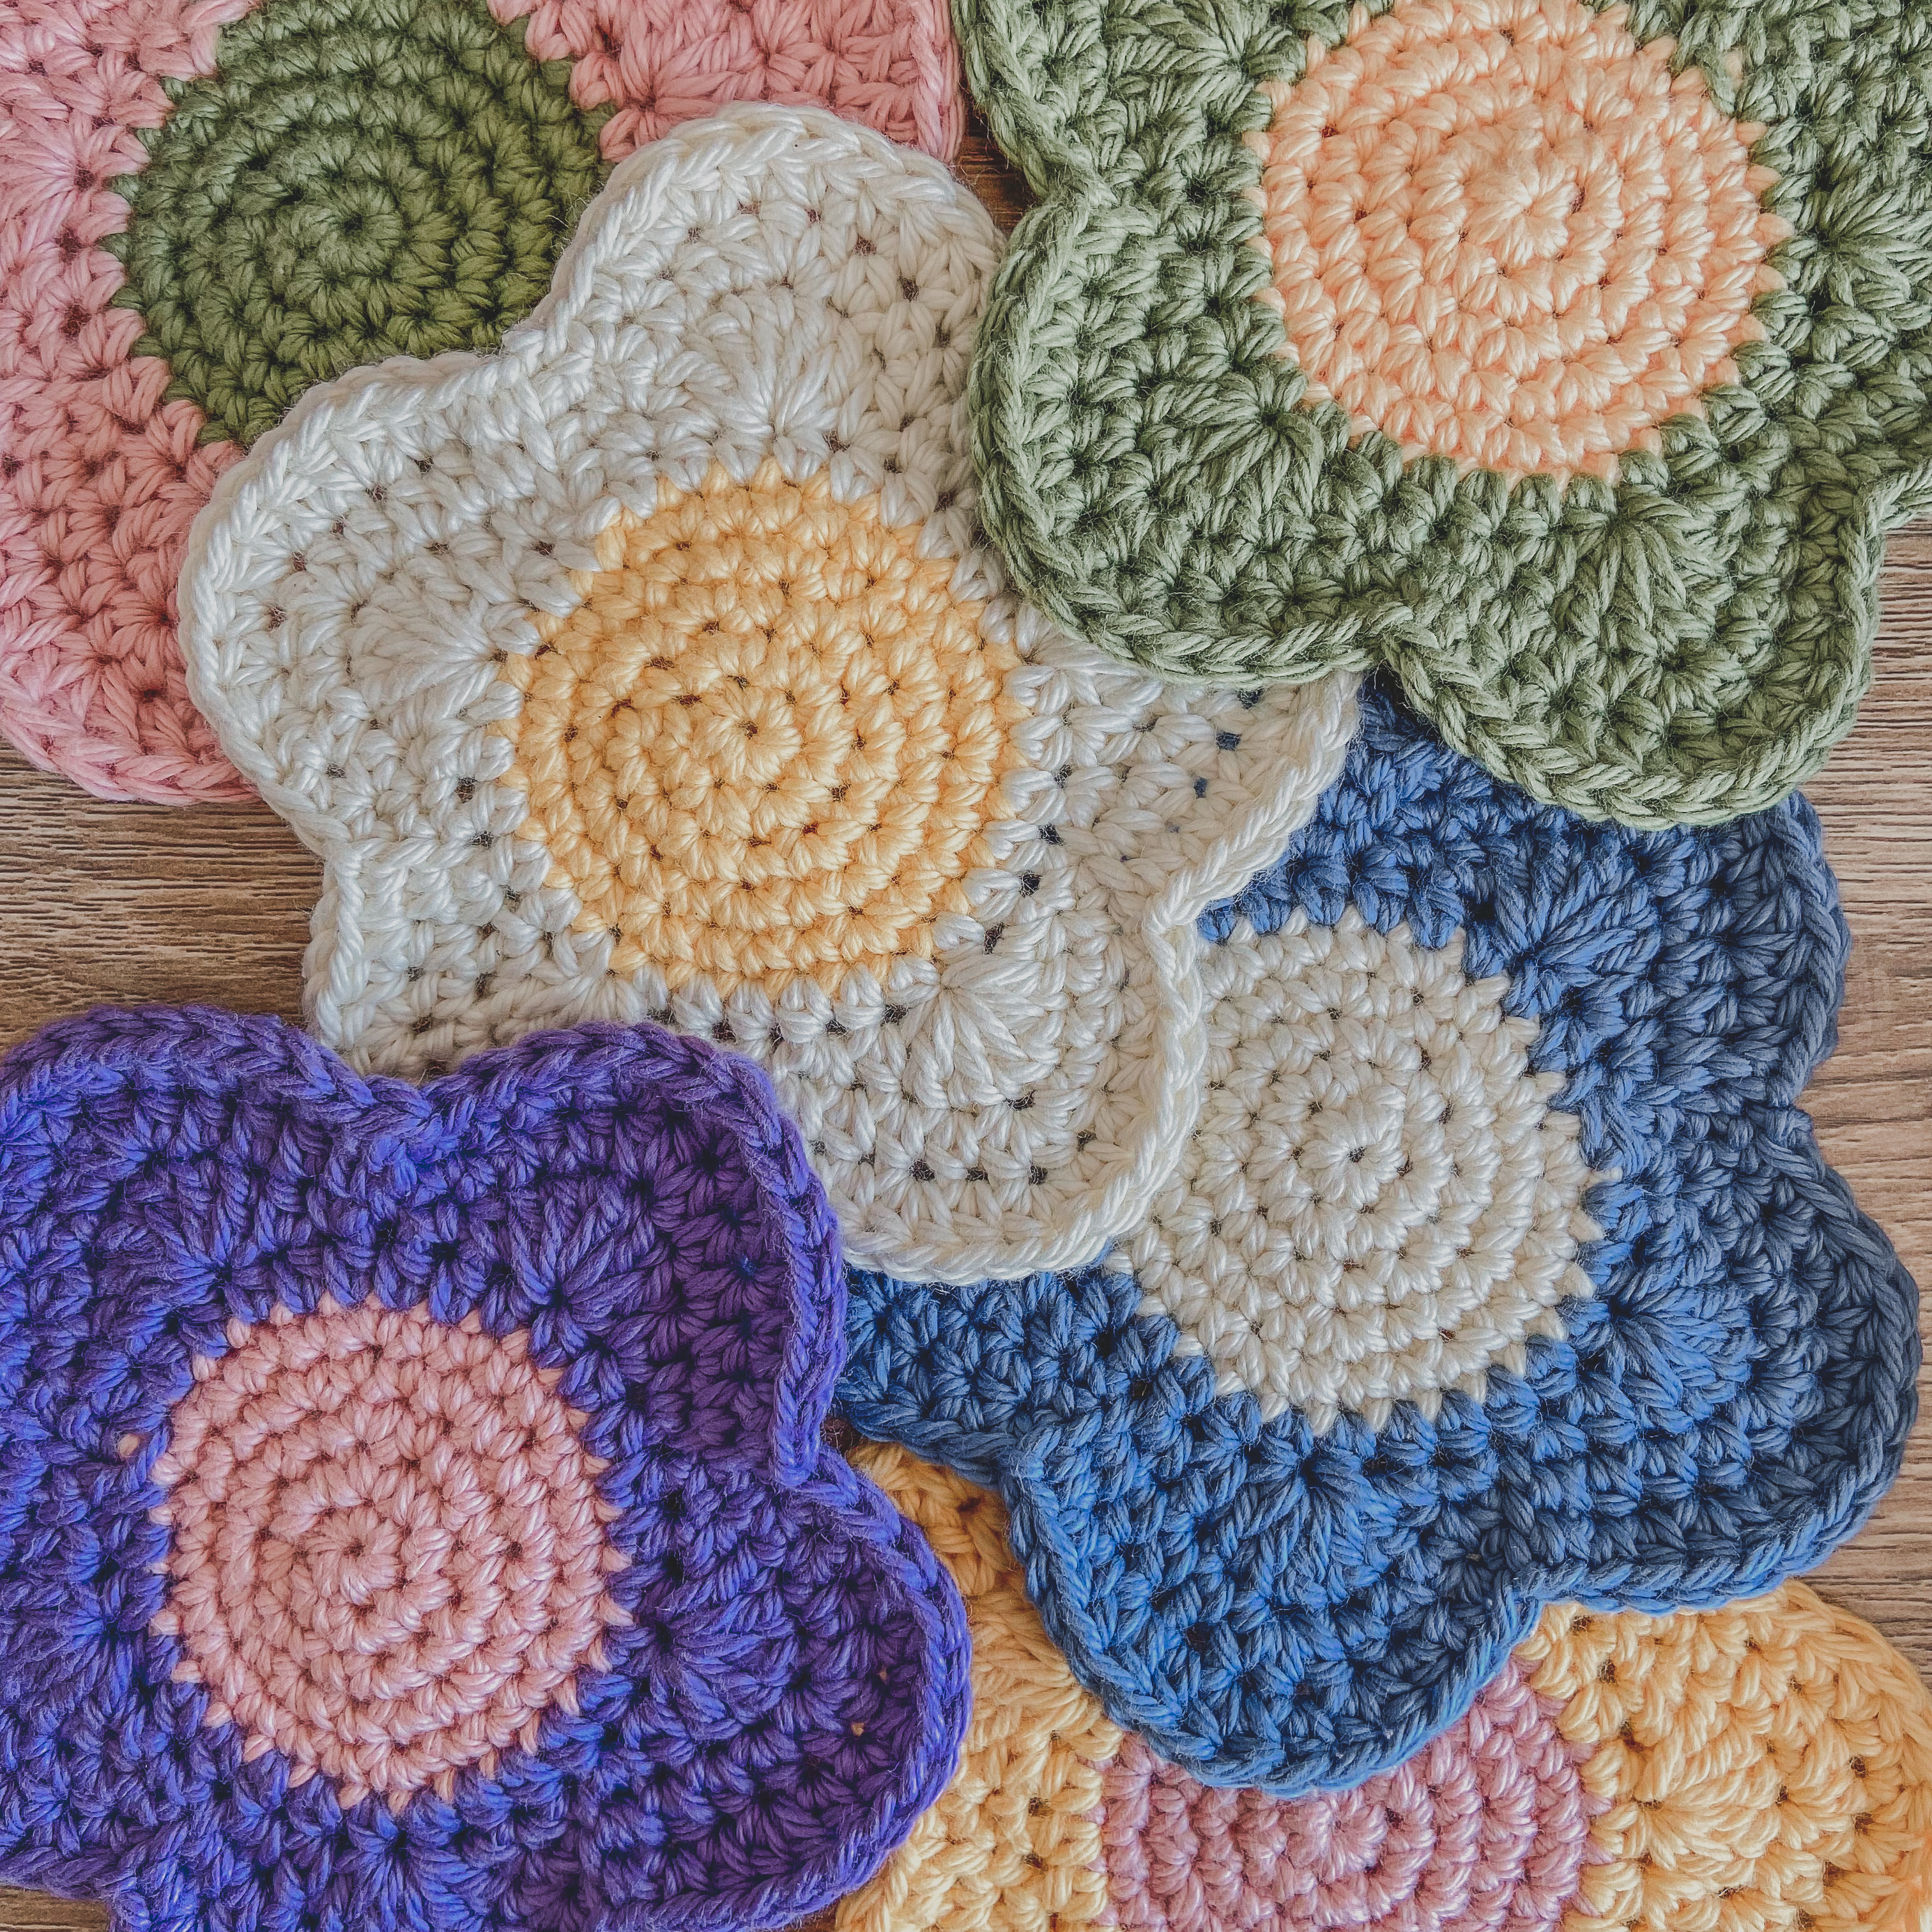 How To Crochet a Coaster, Crochet Coasters Made Easy